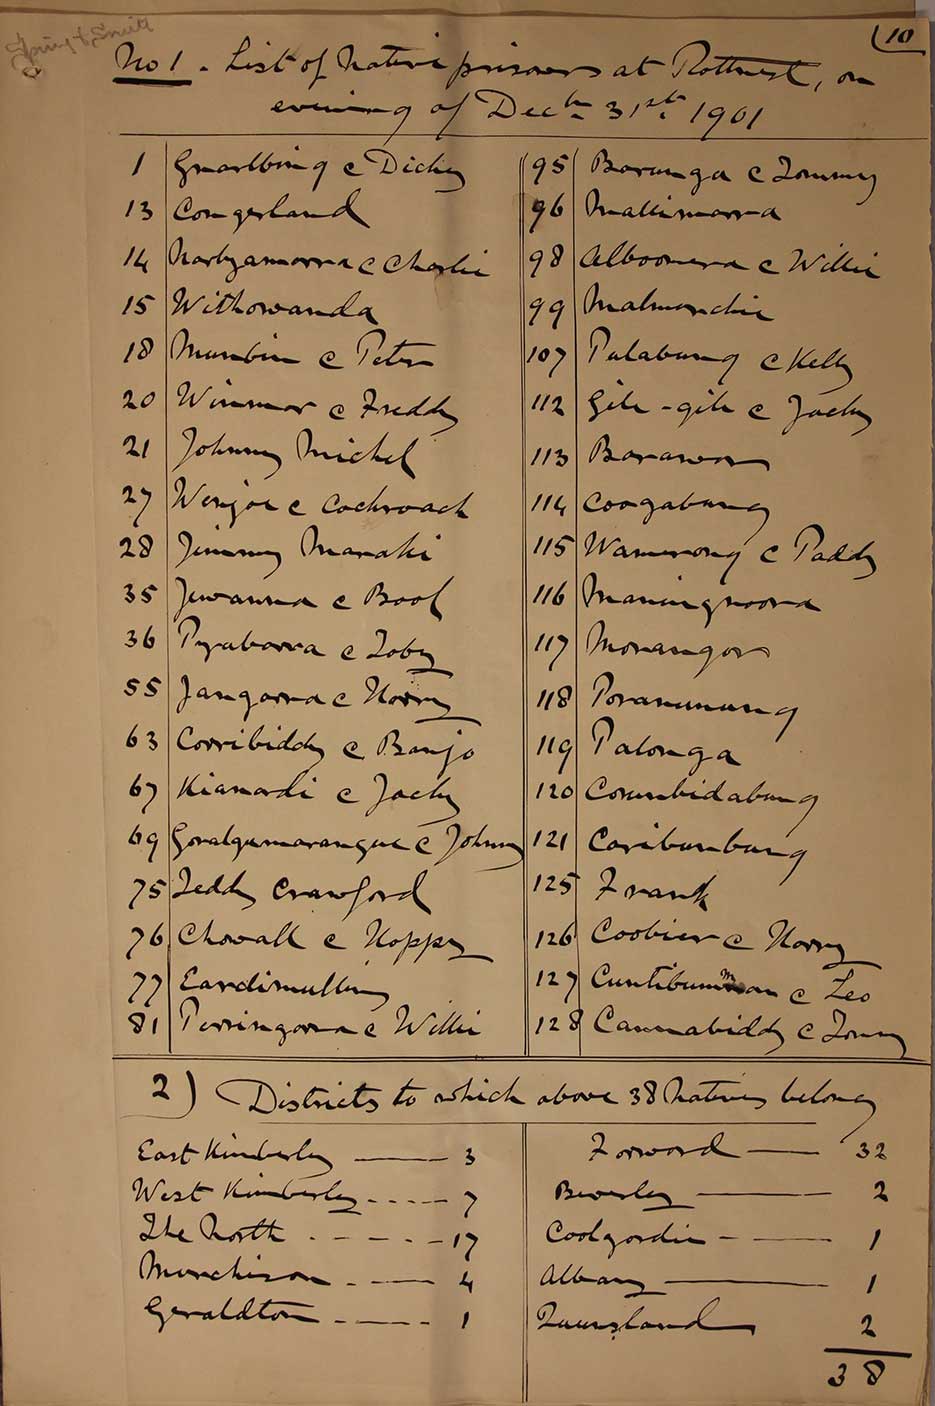 Chief Secretary's Department list of Aboriginal prisoners at Wadjemup as at 31 December 1901